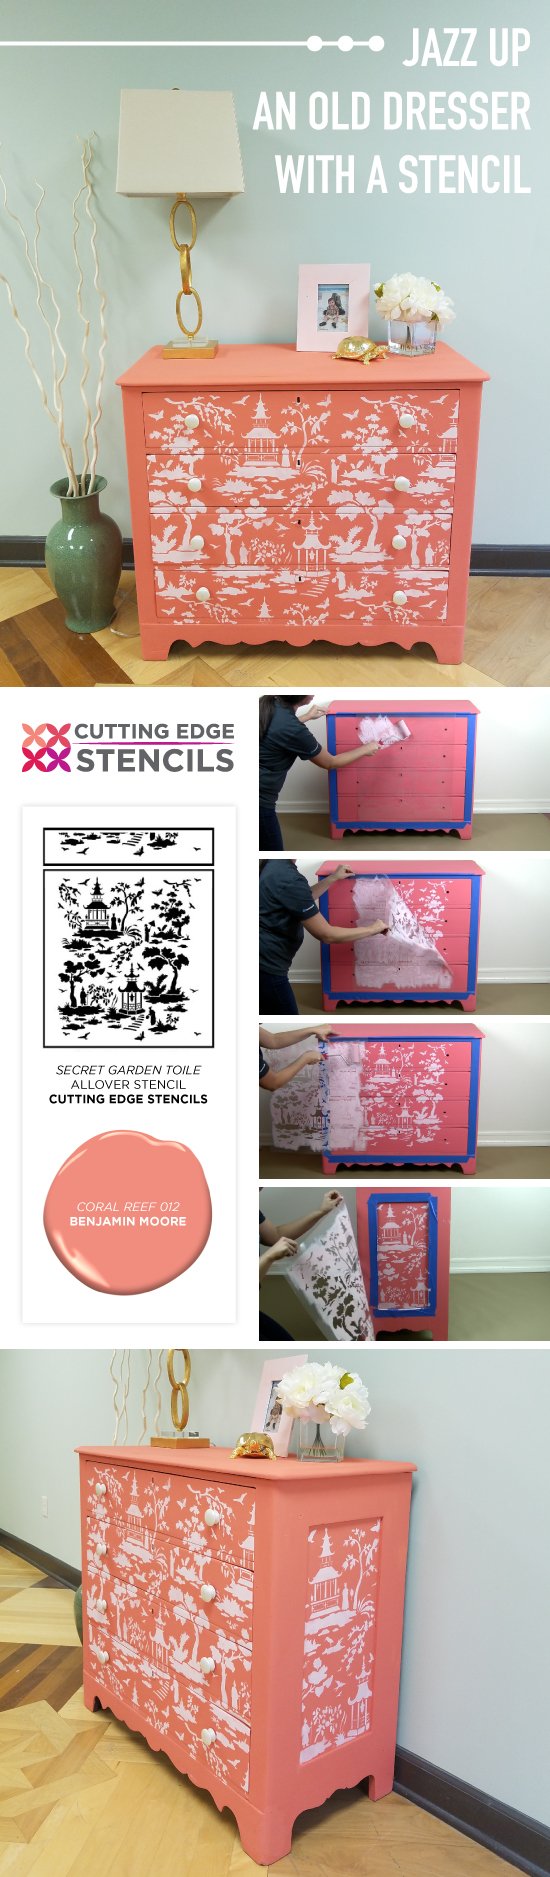 Cutting Edge Stencils shares how to paint and stencil an old dresser using the Secret Garden Toile Stencil. http://www.cuttingedgestencils.com/garden-toile-stencil-chinoiserie-wallpaper.html